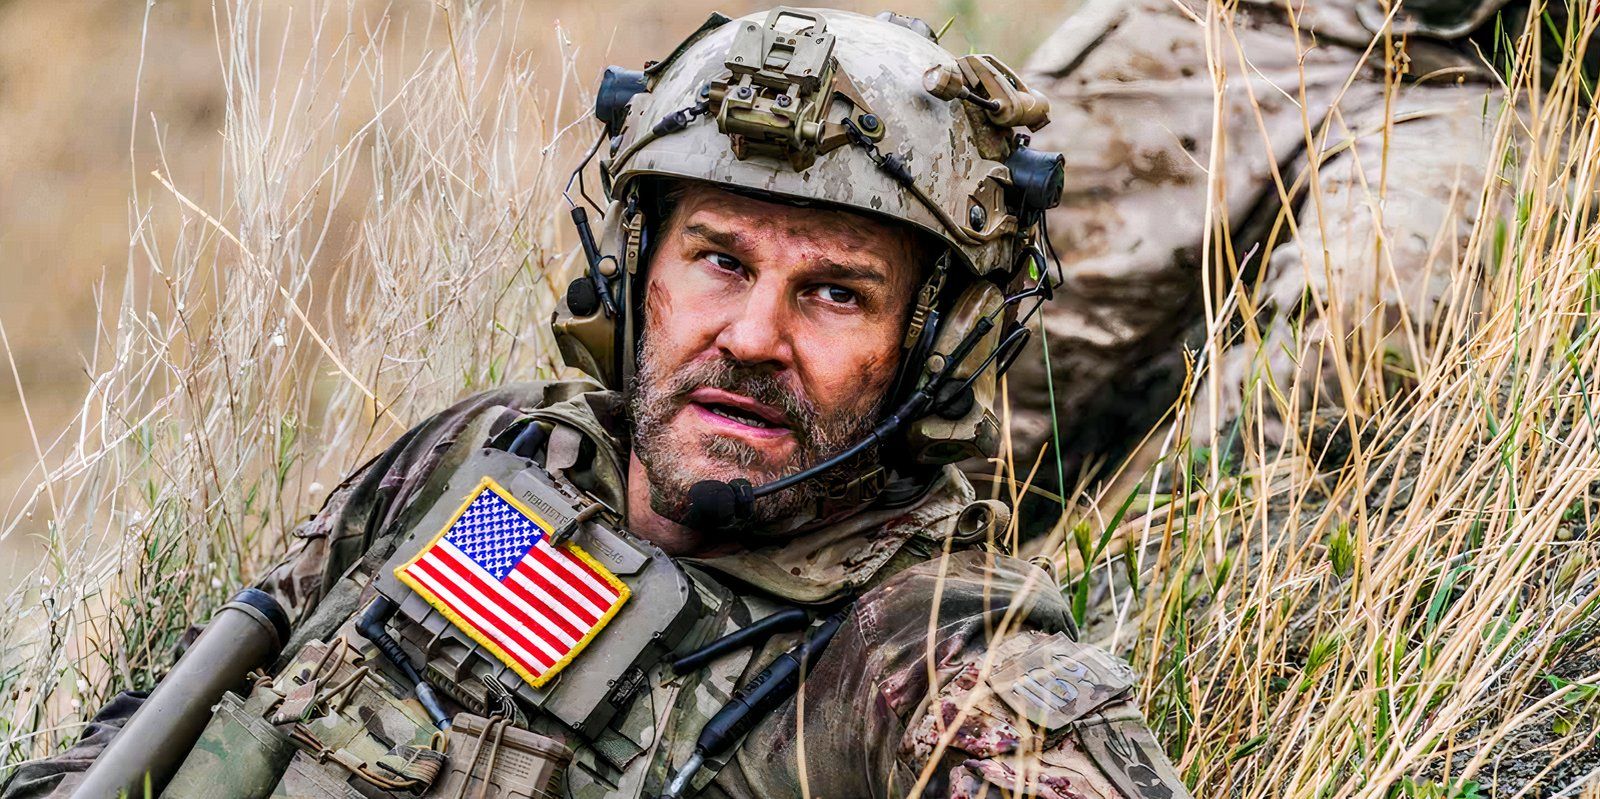 David Boreanaz as Jason in SEAL Team